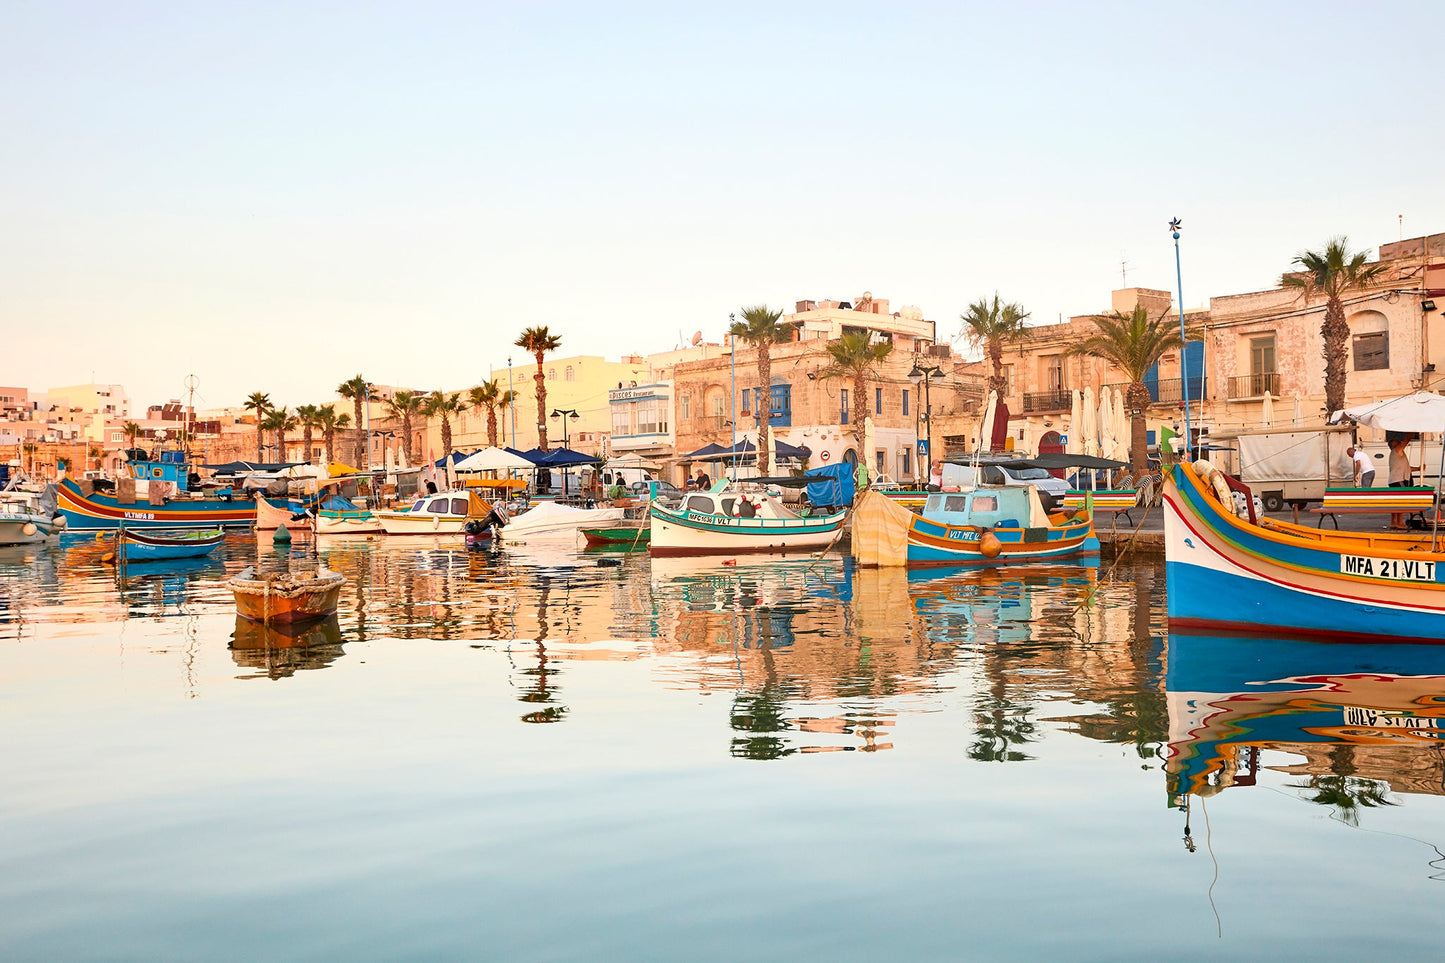 Water dance - Marsaxlokk fishing village, Malta